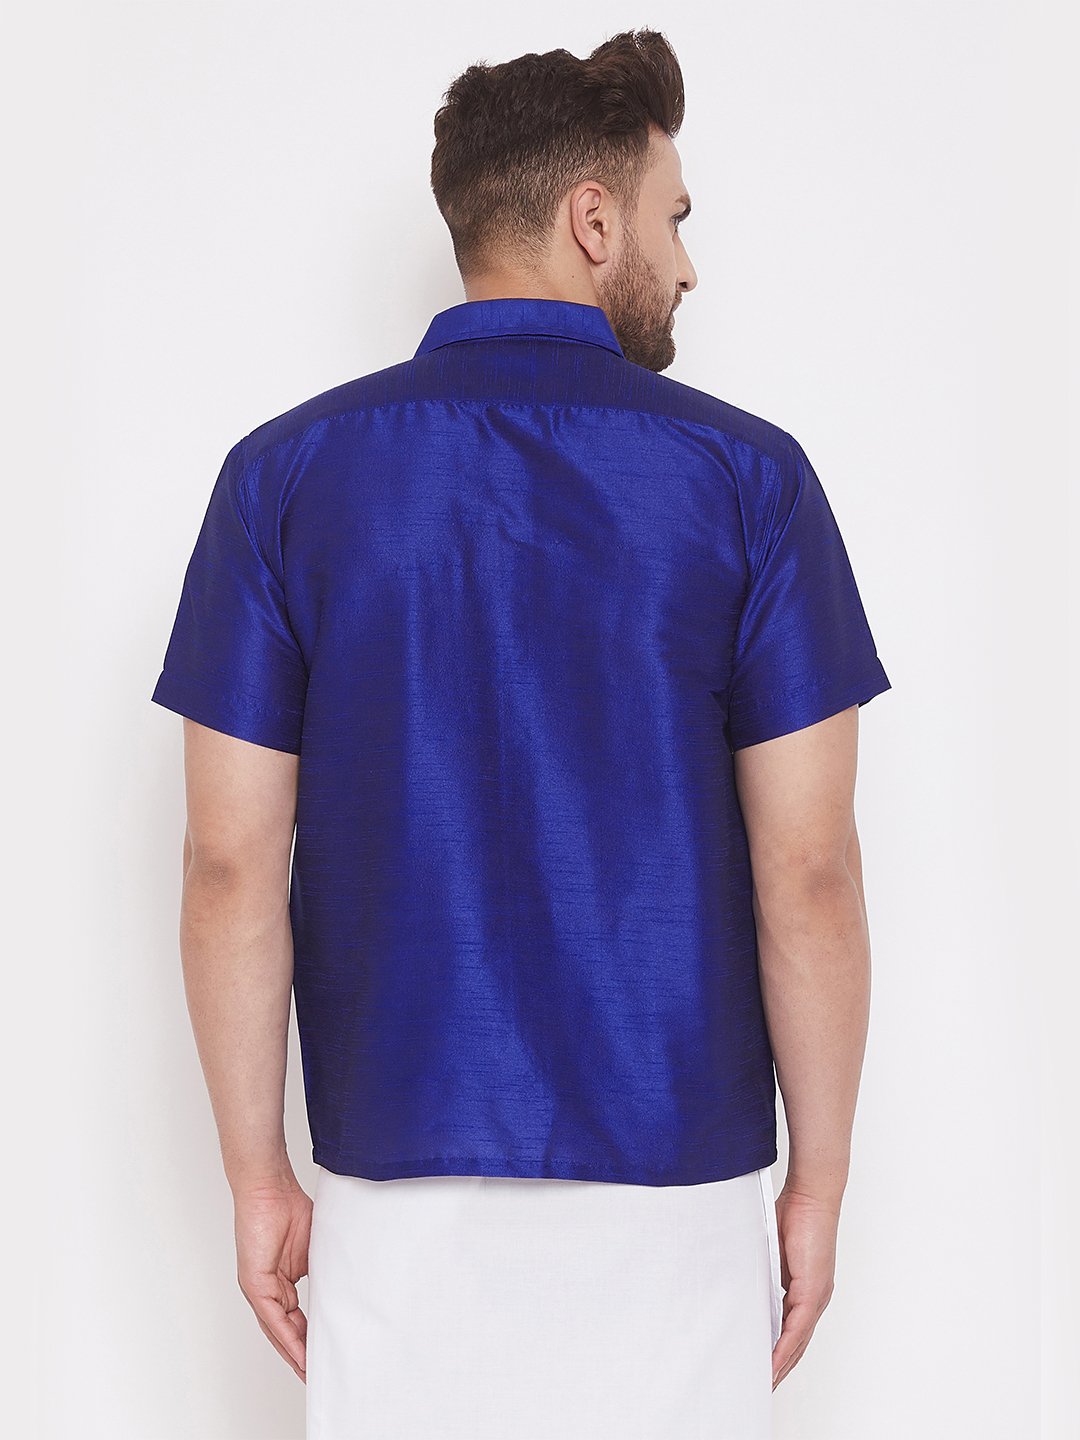 Men's Blue Cotton Silk Blend Ethnic Shirt - Vastramay